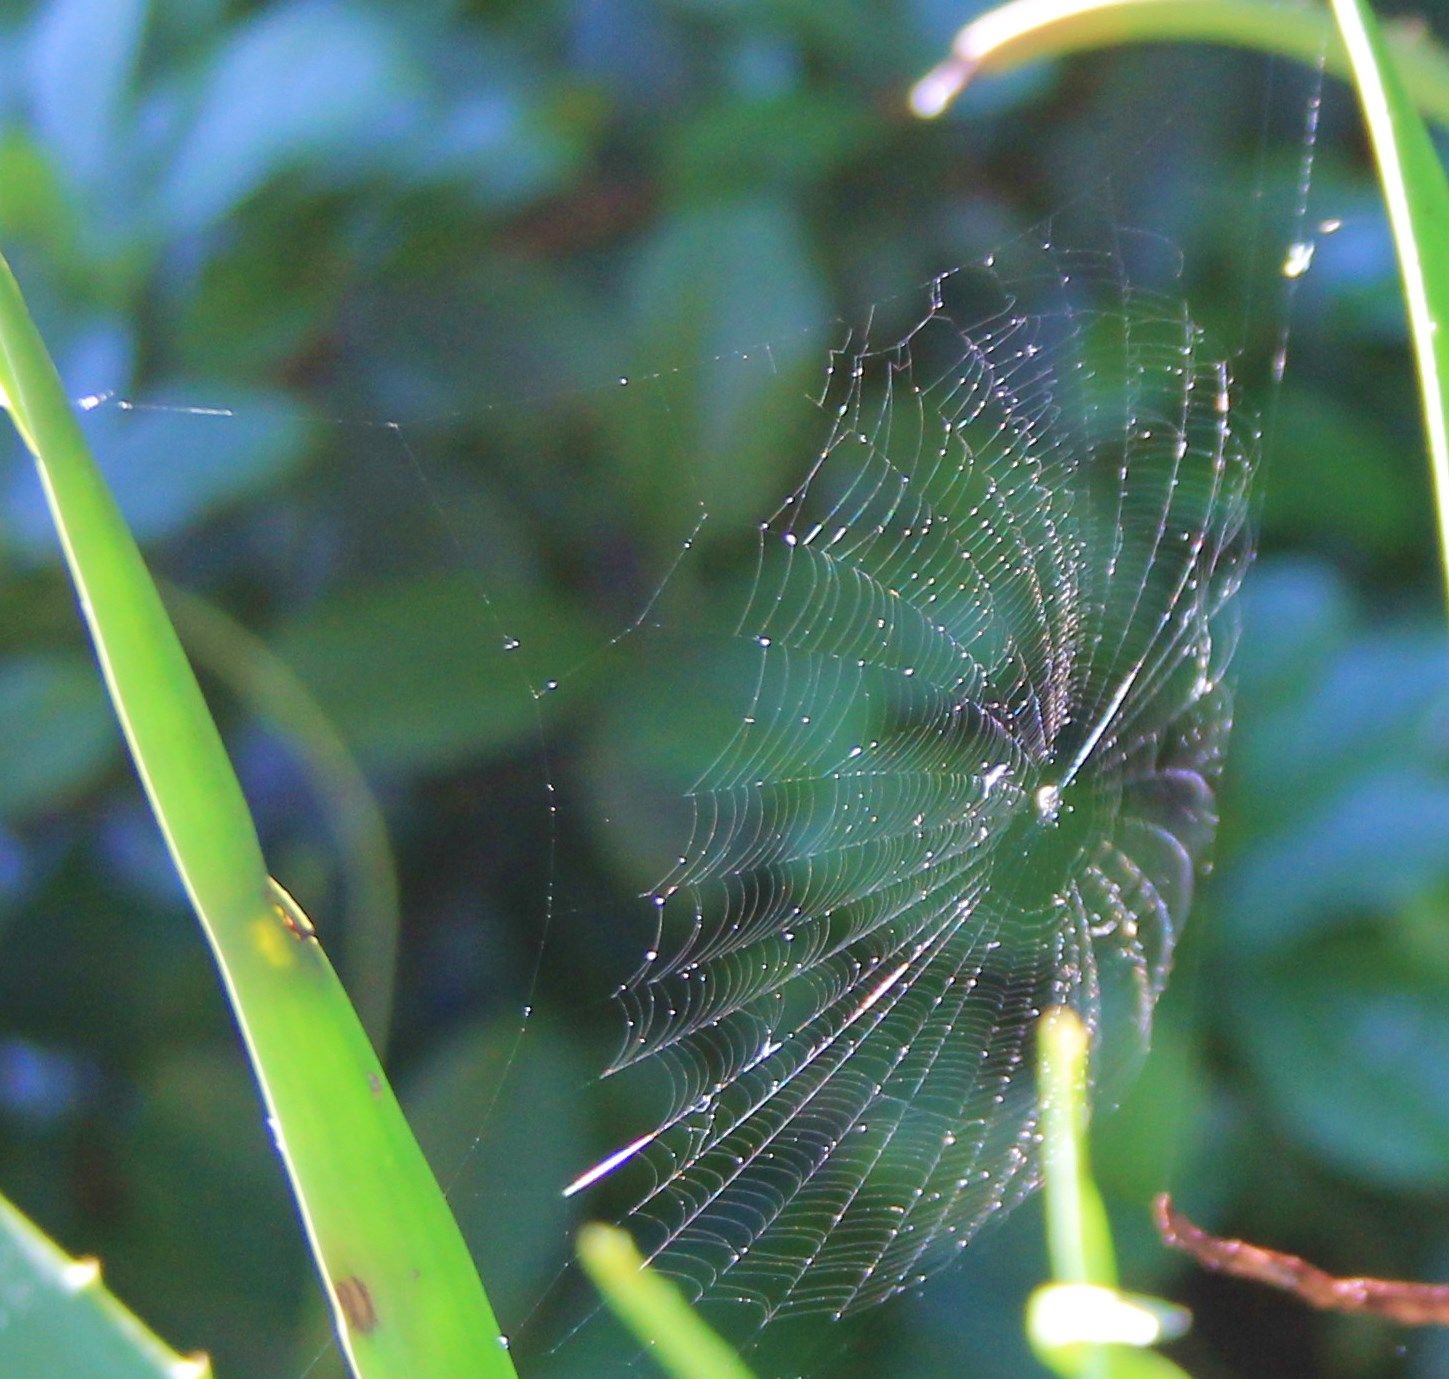 Spider web on Aloe Vera plant, Orlando, Fl. | She weaves | Pinterest